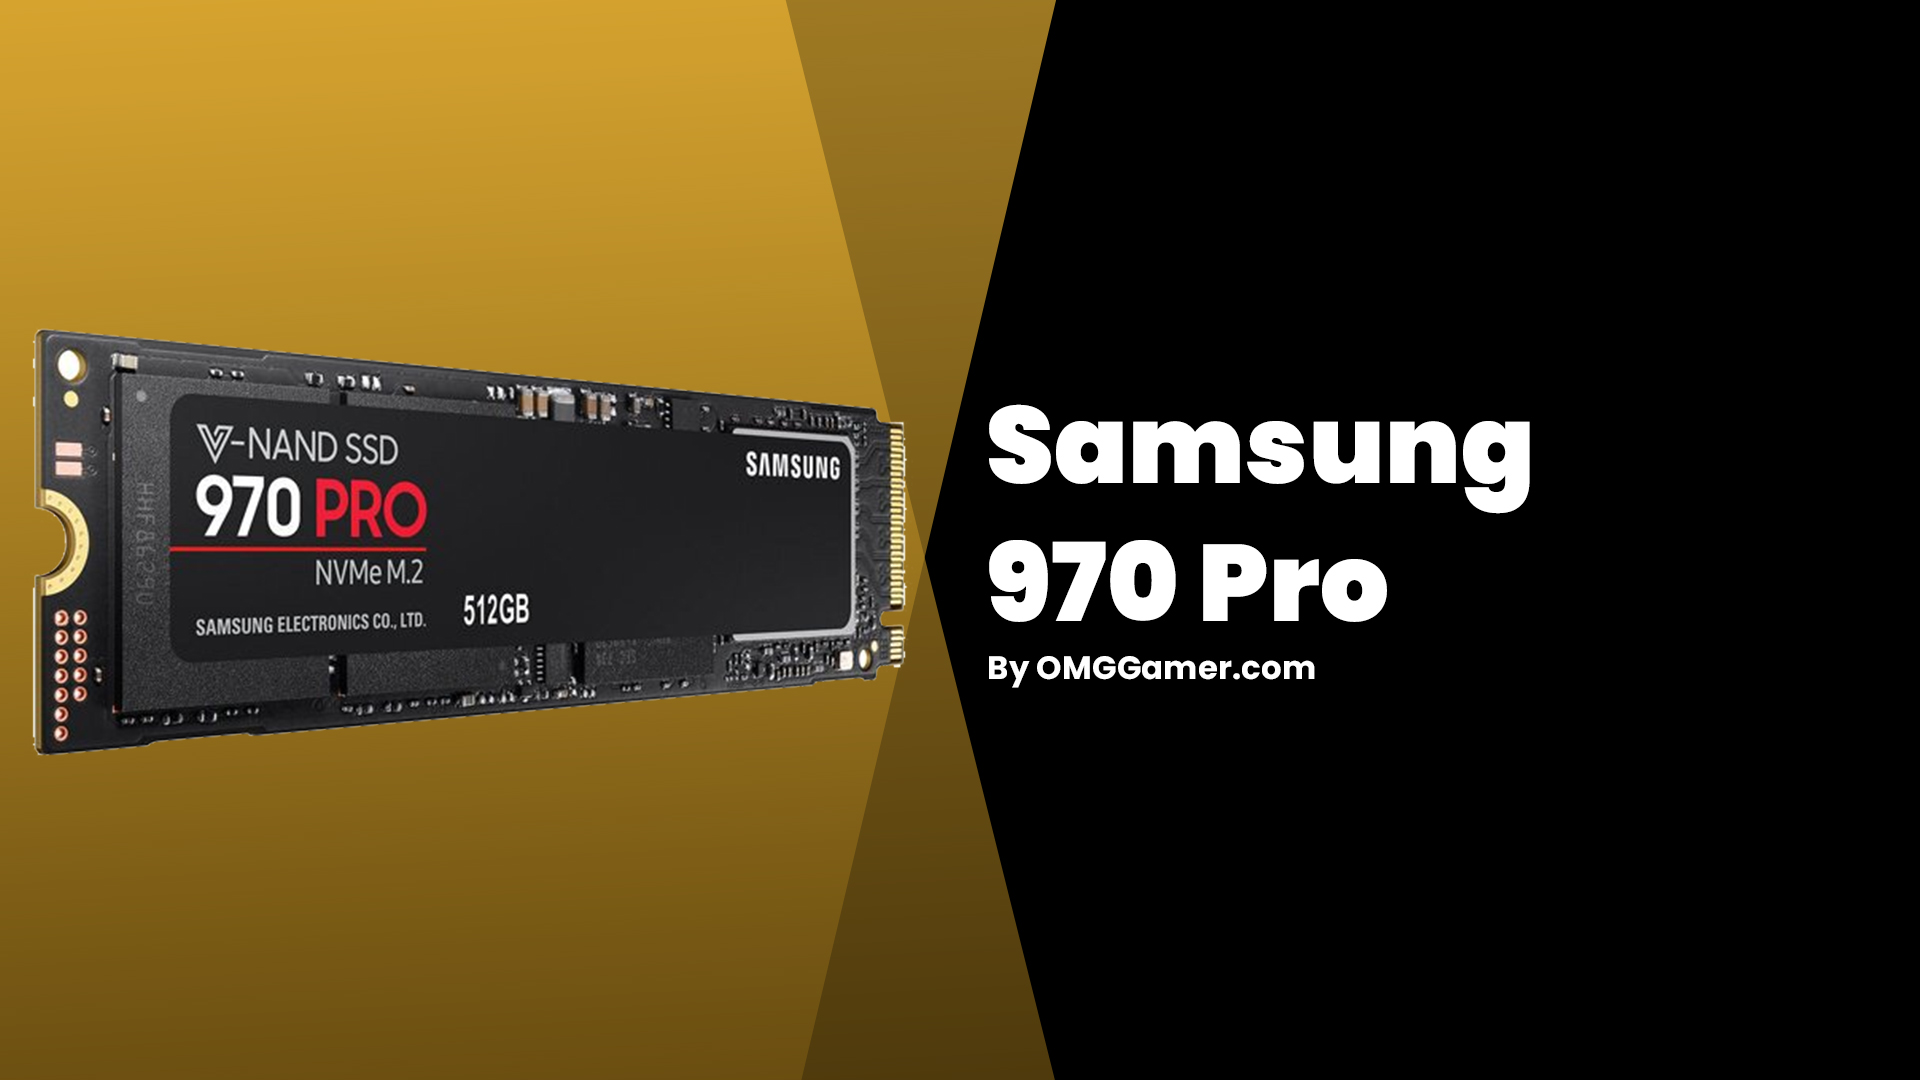 Samsung 970 Pro